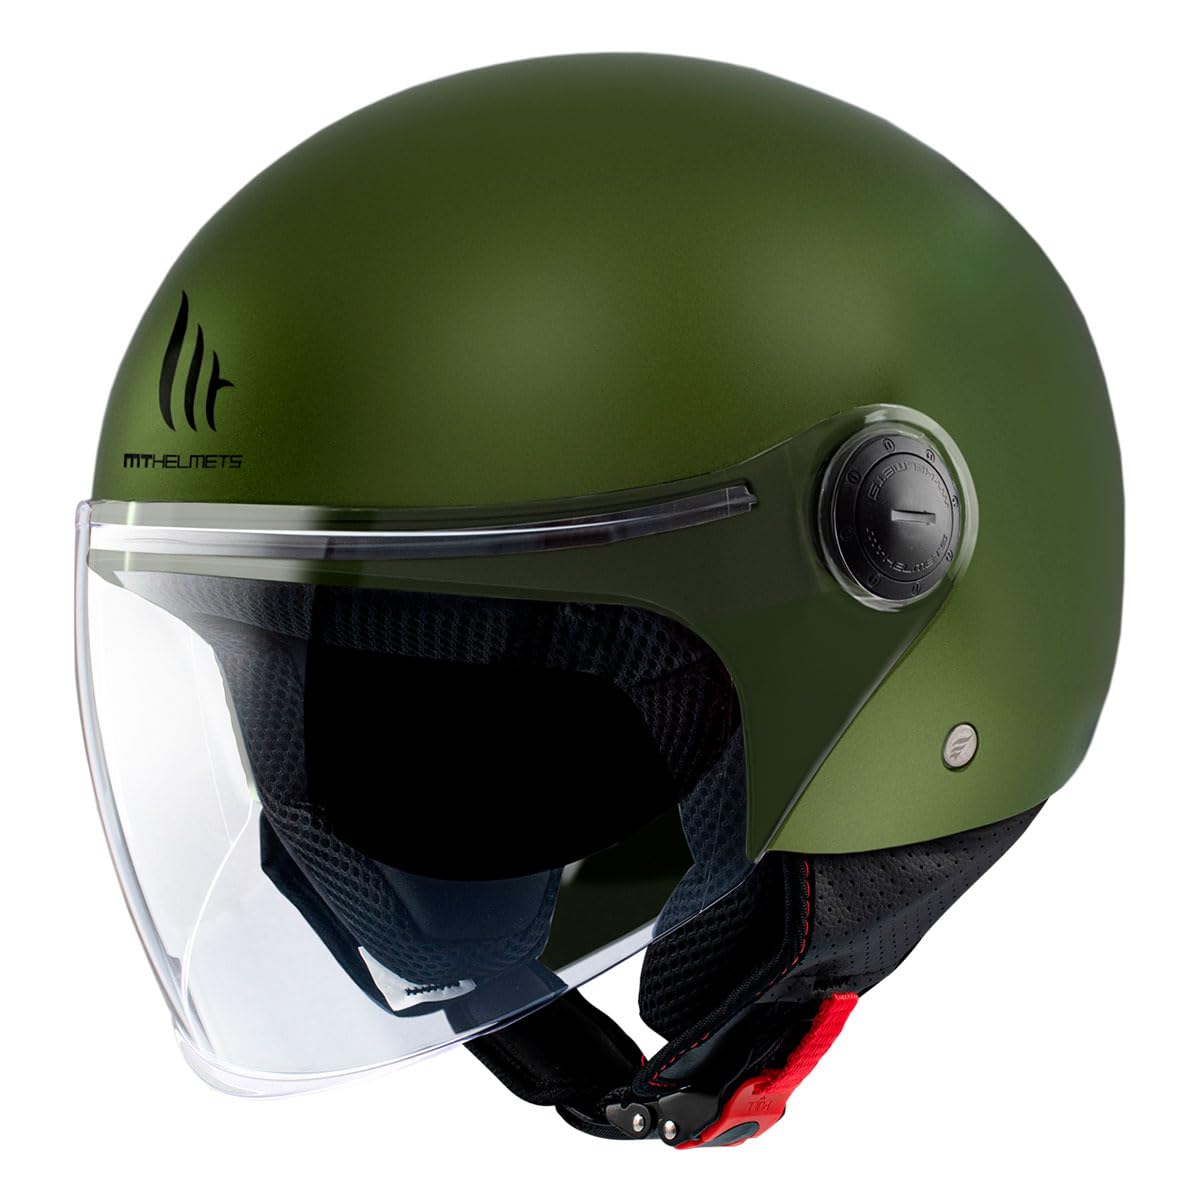 MT Helmets MT Helm Street Solid matt grün Größe XS | Klares Visier | Jethelme | Ratsche | Kunststoff | geeignet für Mofa, Moped, Motorrad, Roller von MT HELMETS